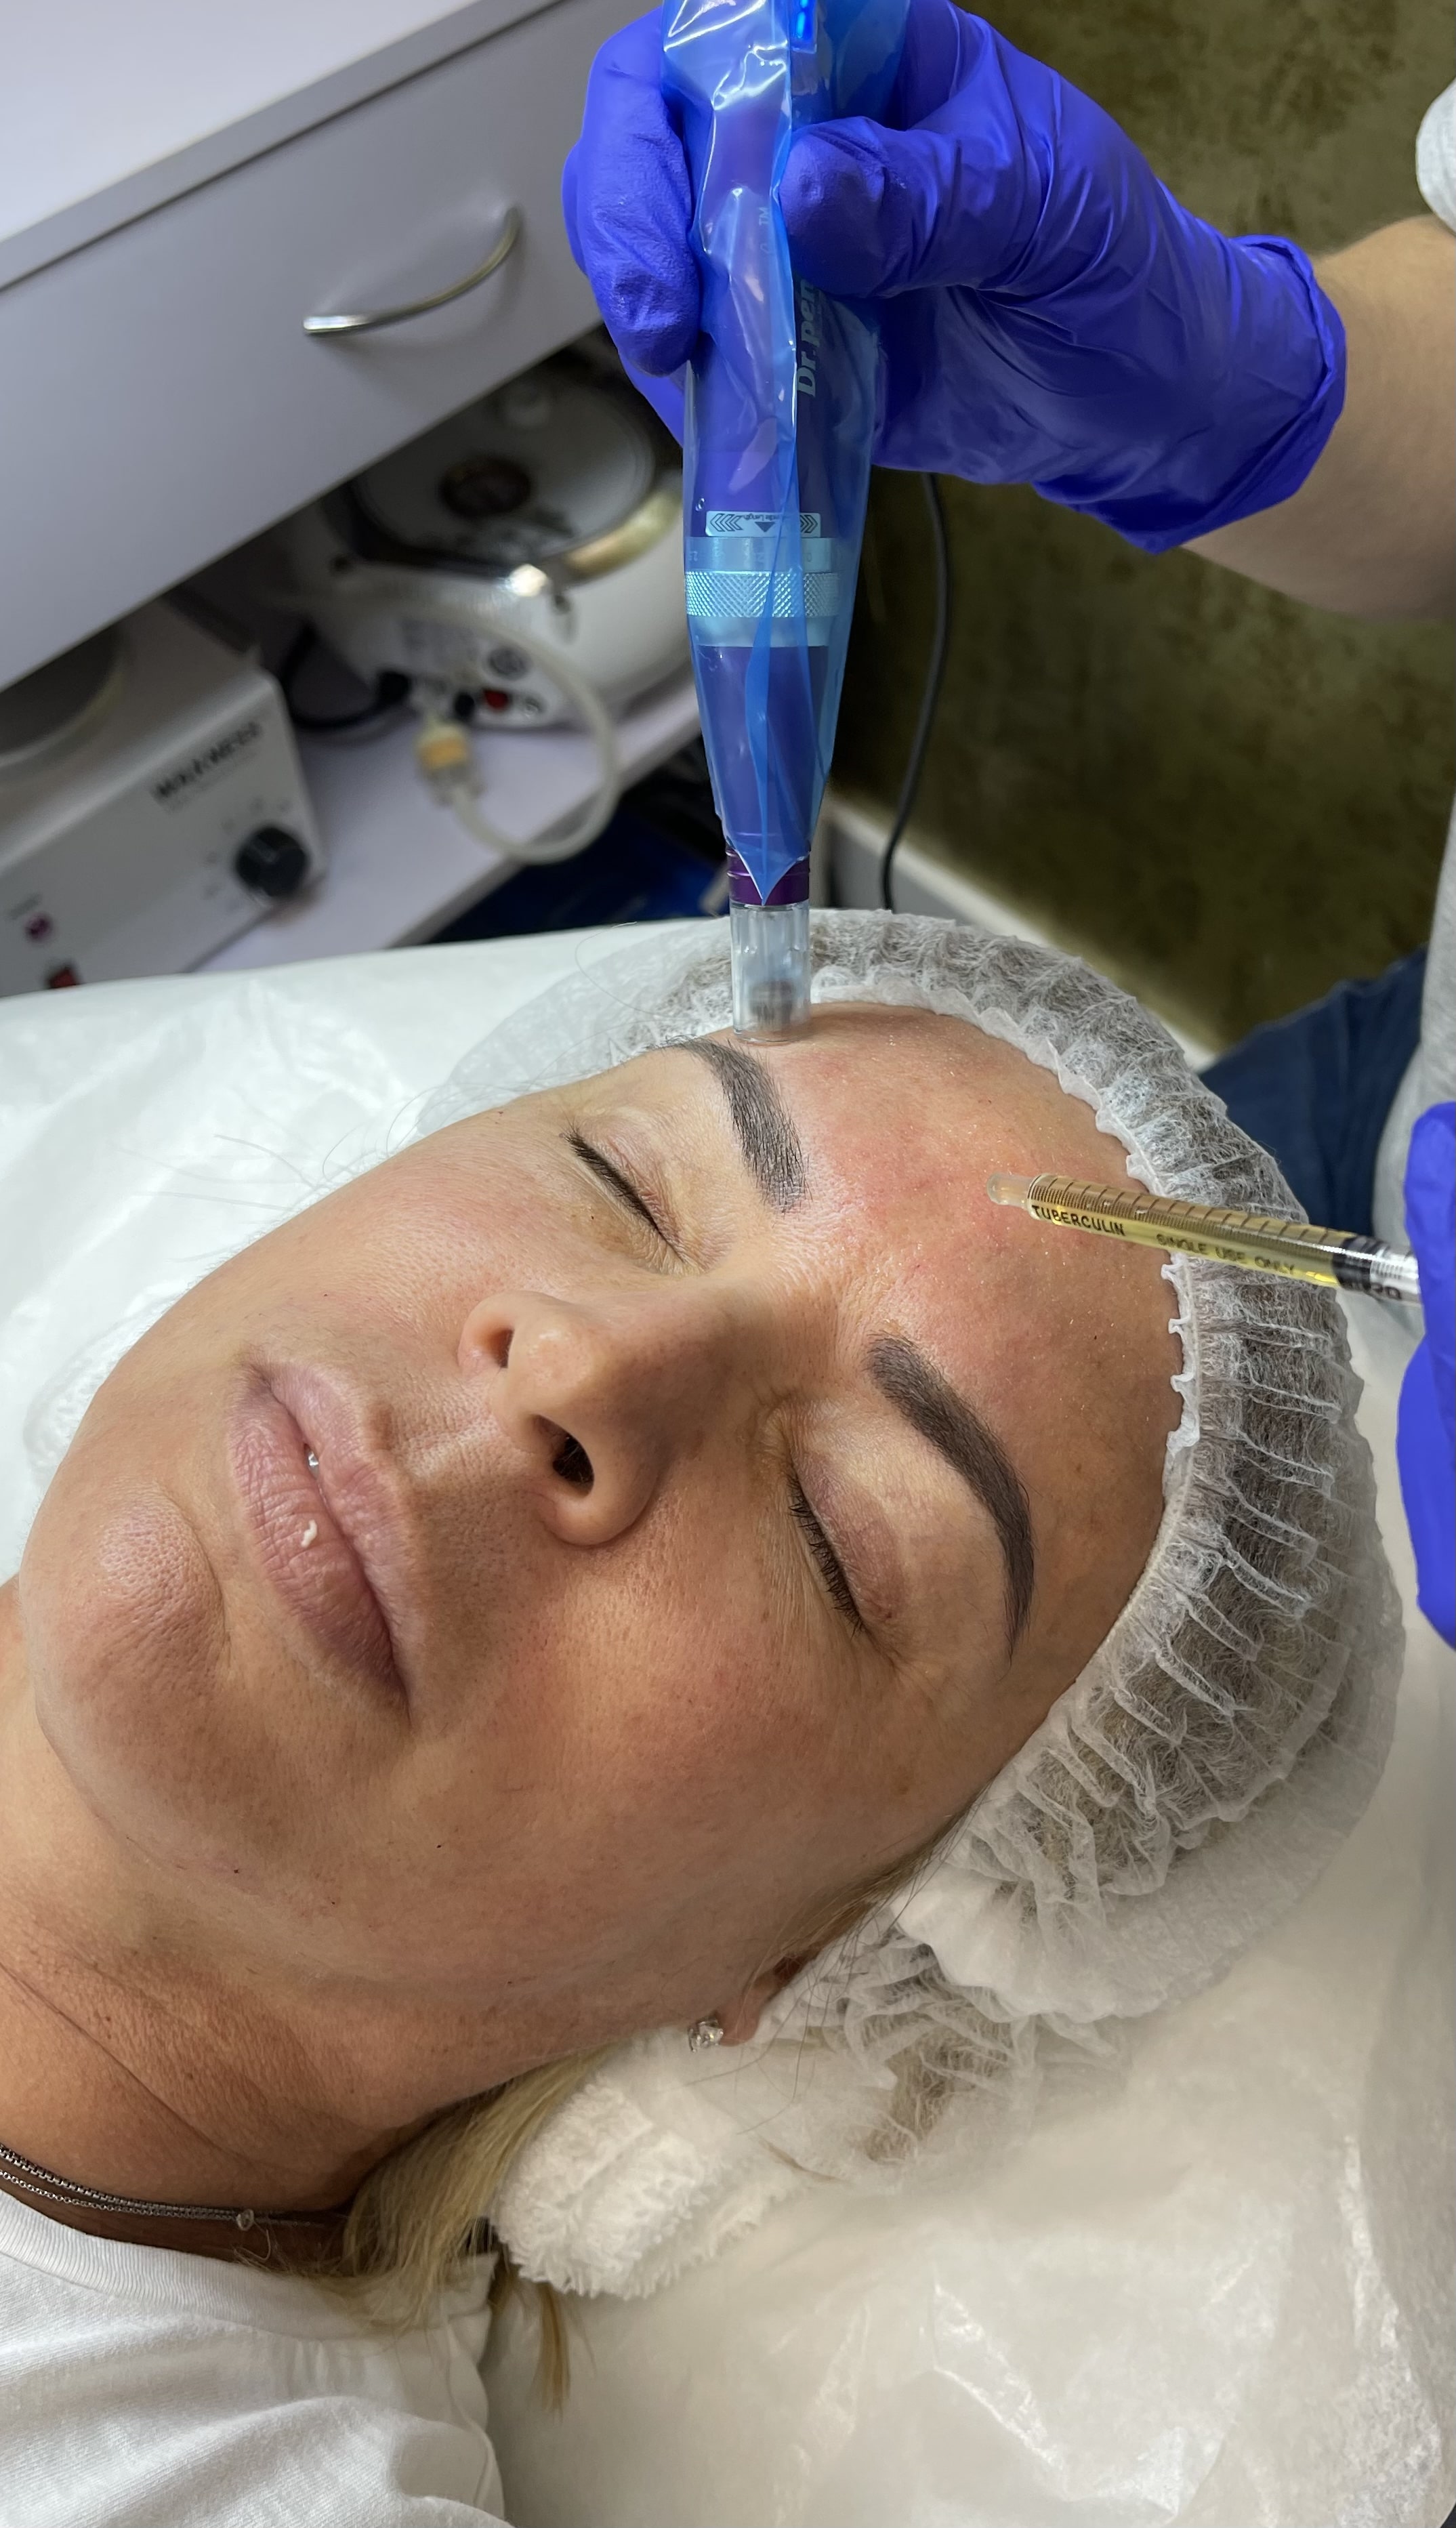 A face receiving plasma treatment